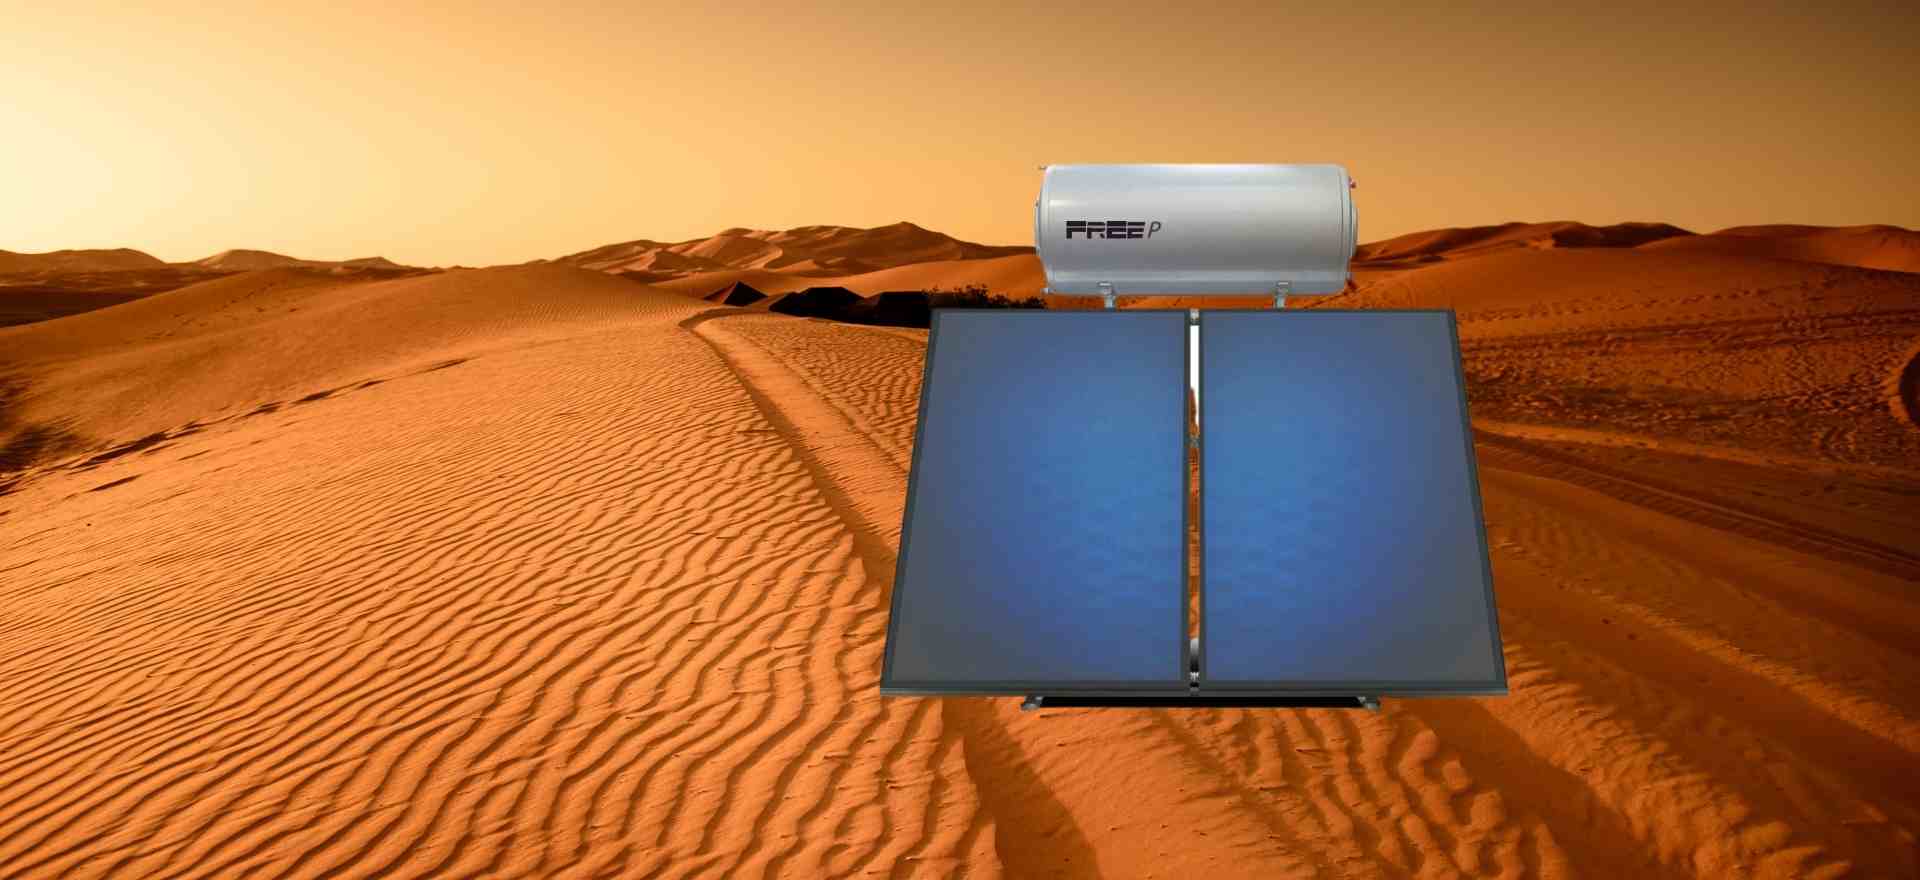 Solare termico Pleion su fondo deserto